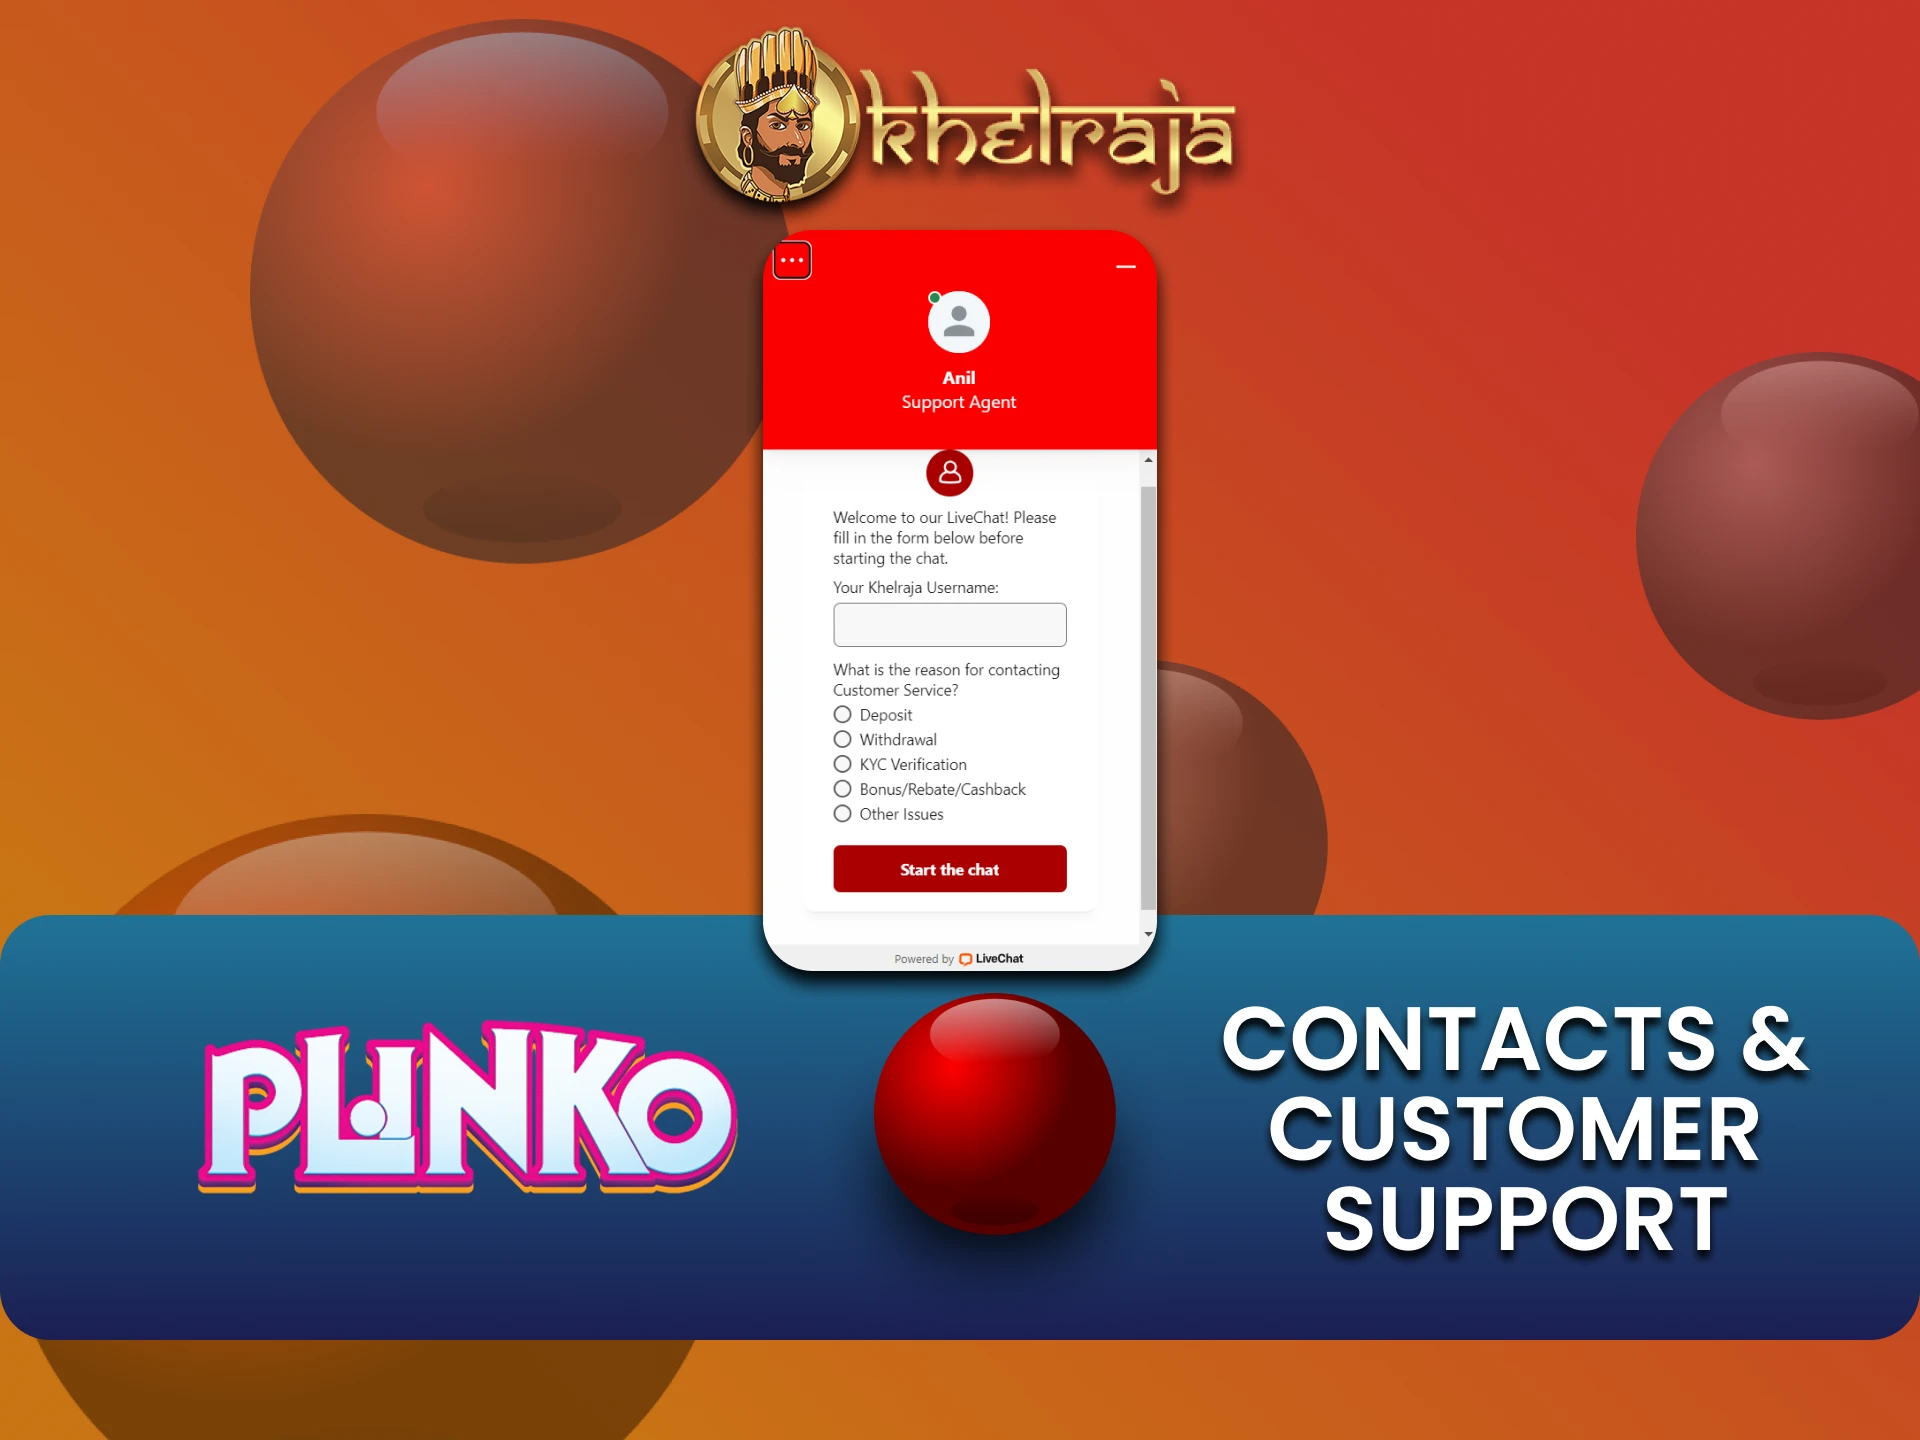 Choose your way to contact the Khelraja team regarding Plinko questions.